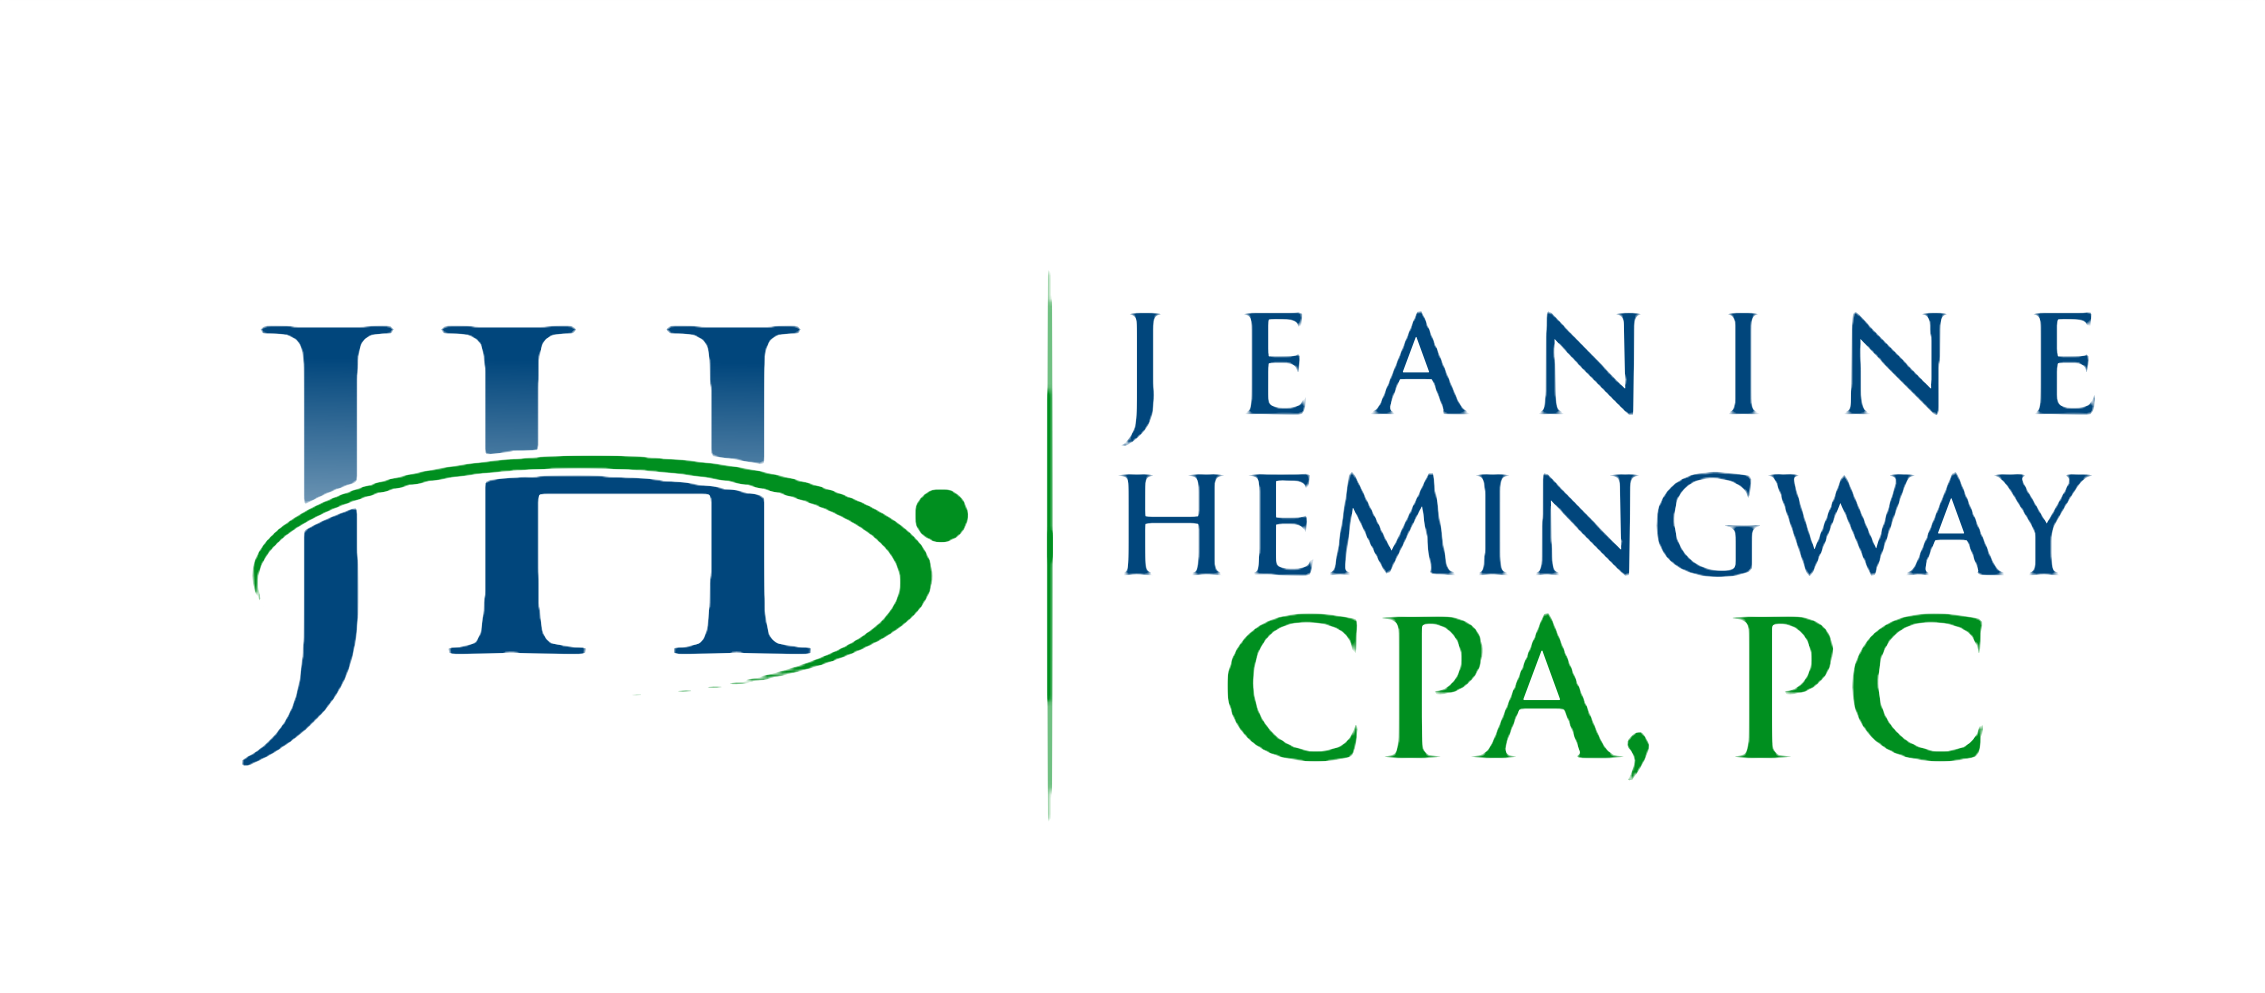 Jeanine Hemingway CPA